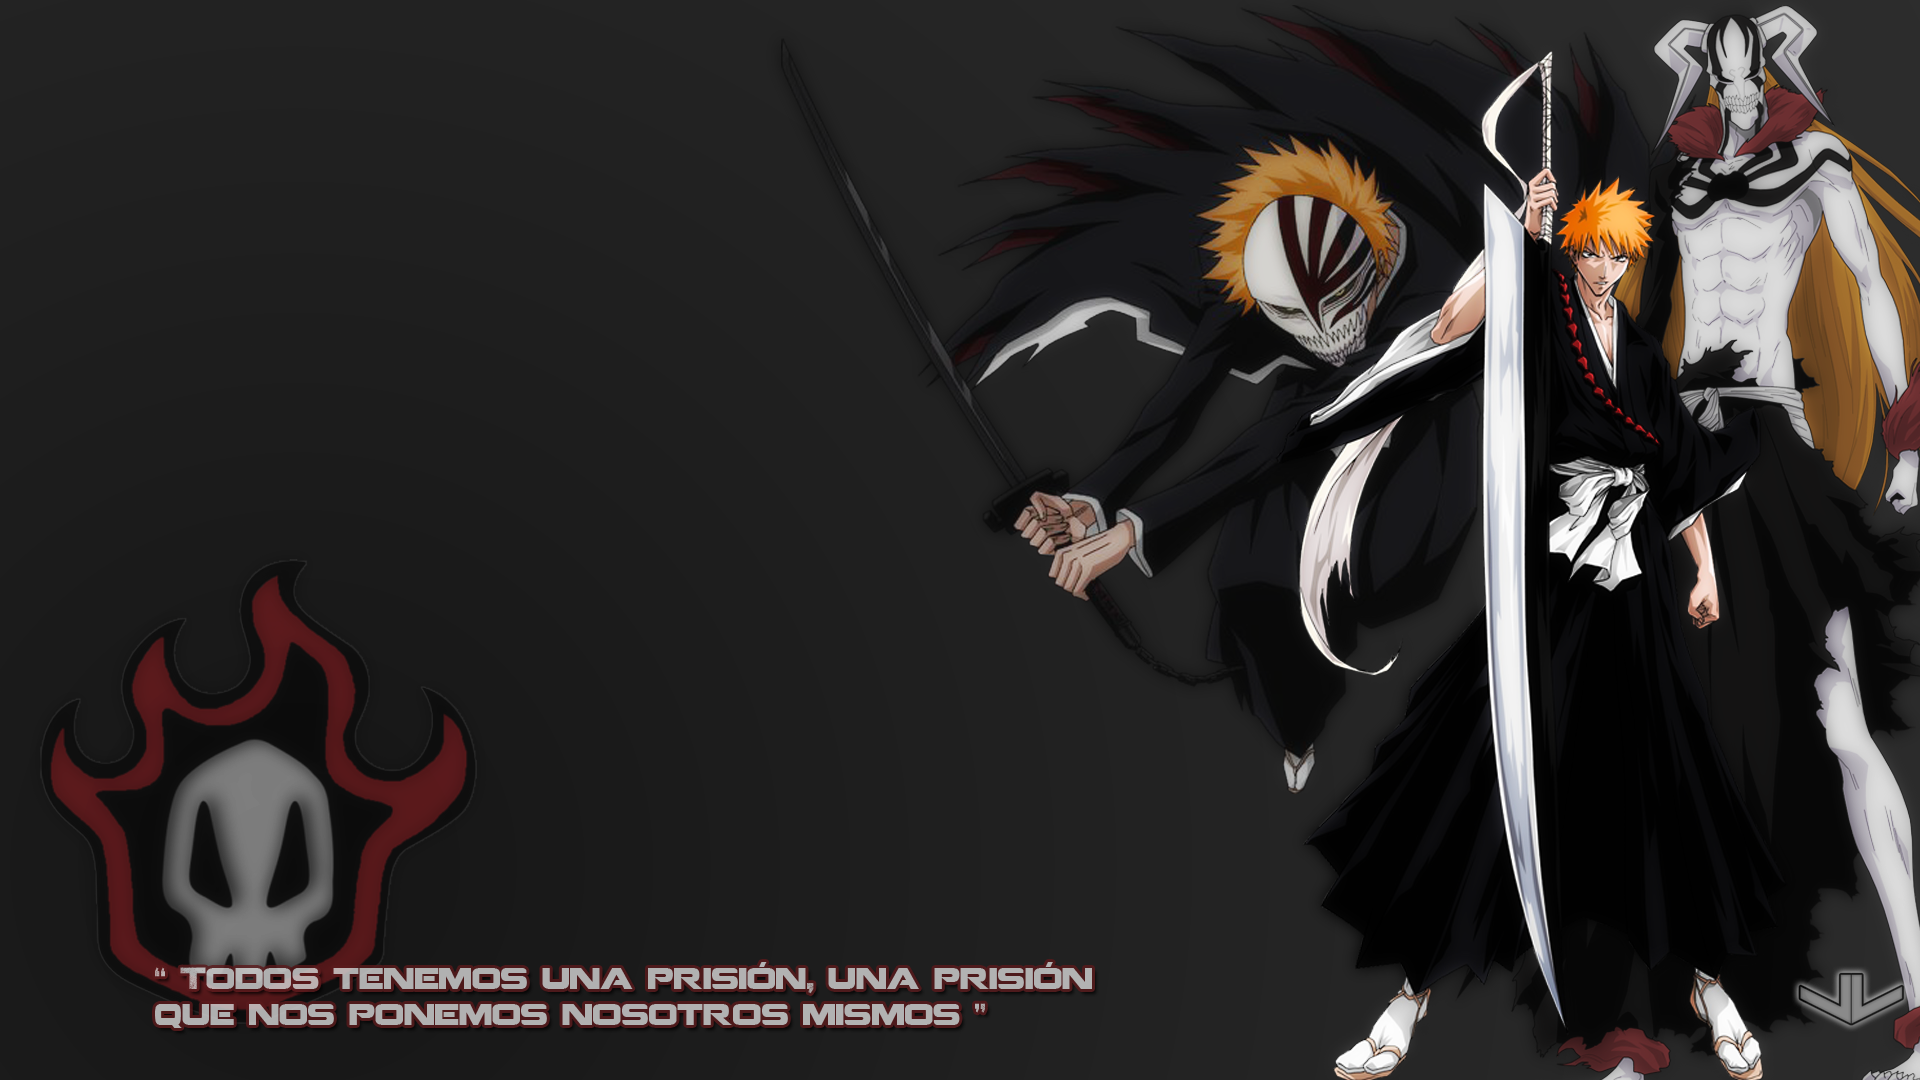 Kurosaki Ichigo - Bleach & Anime Background Wallpapers on Desktop Nexus  (Image 1520811)